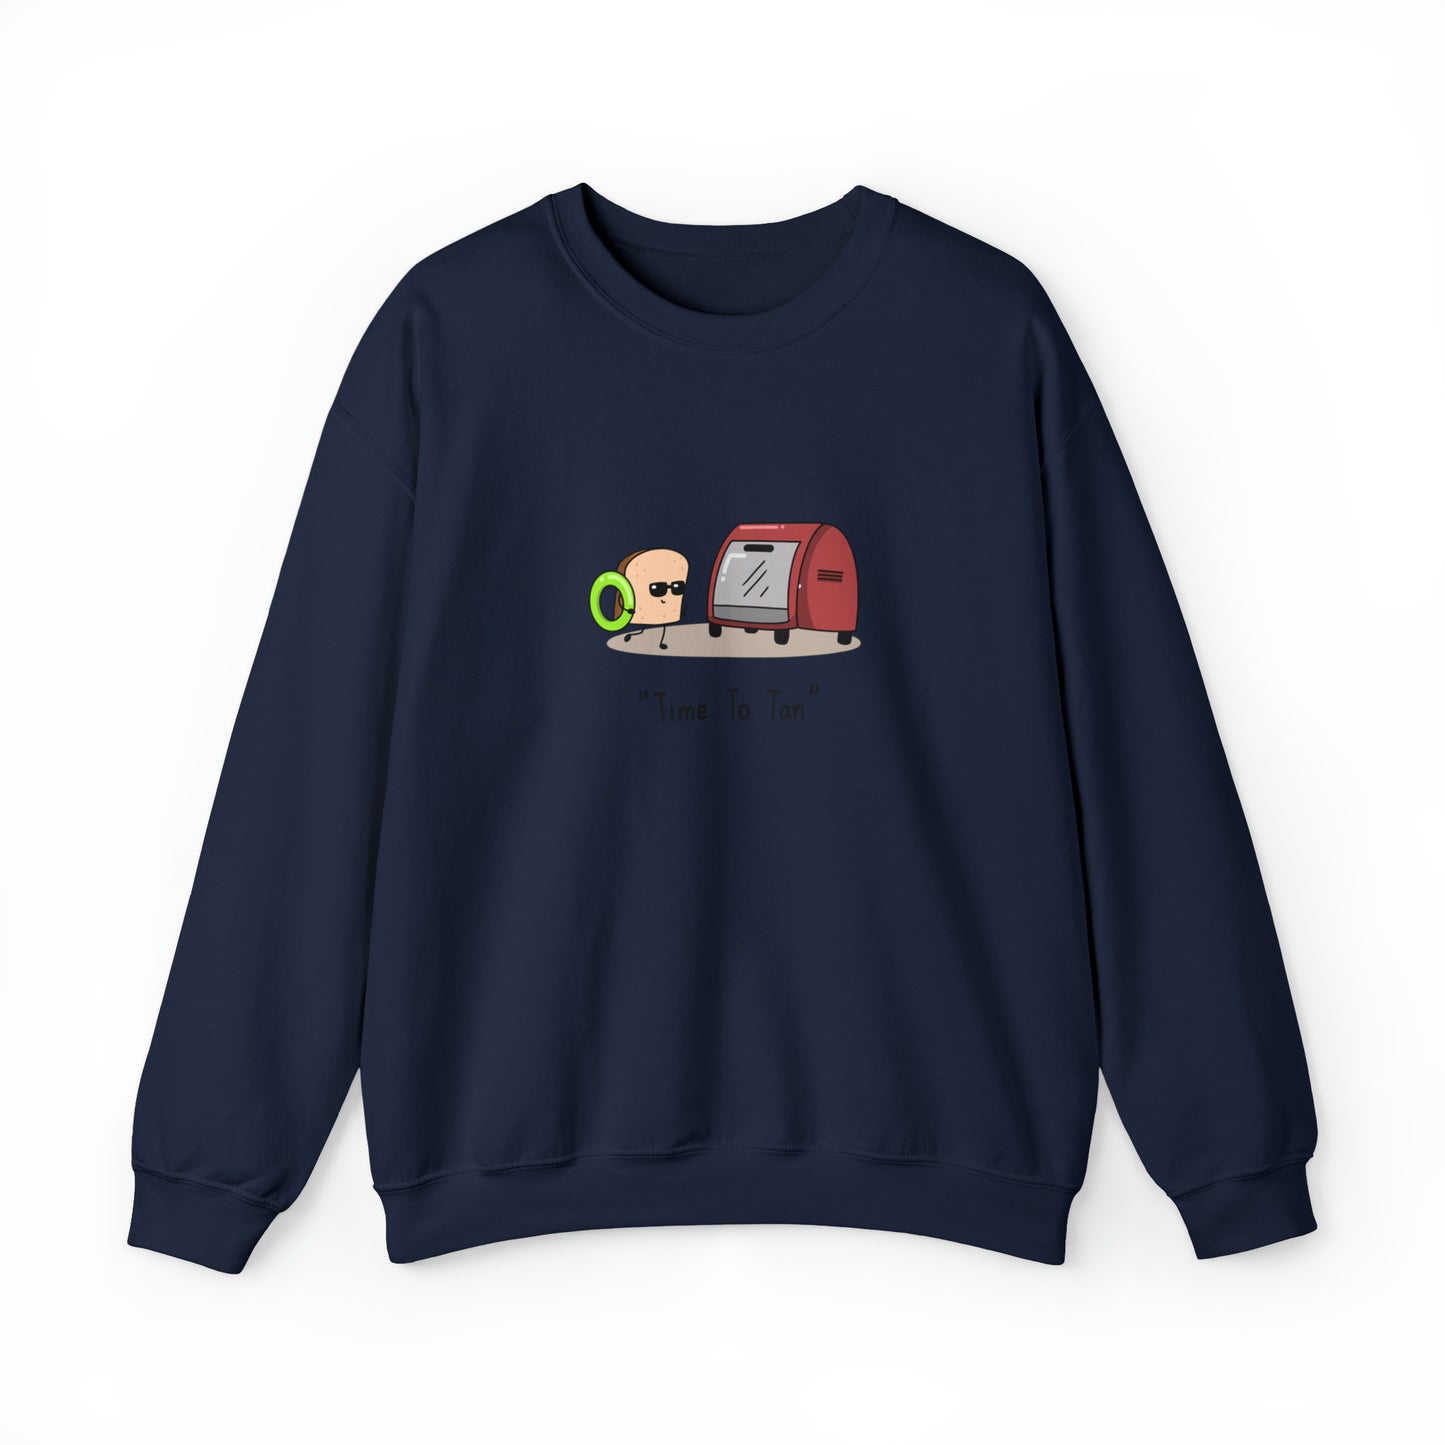 Custom Parody Crewneck Sweatshirt, Time to Tan Design